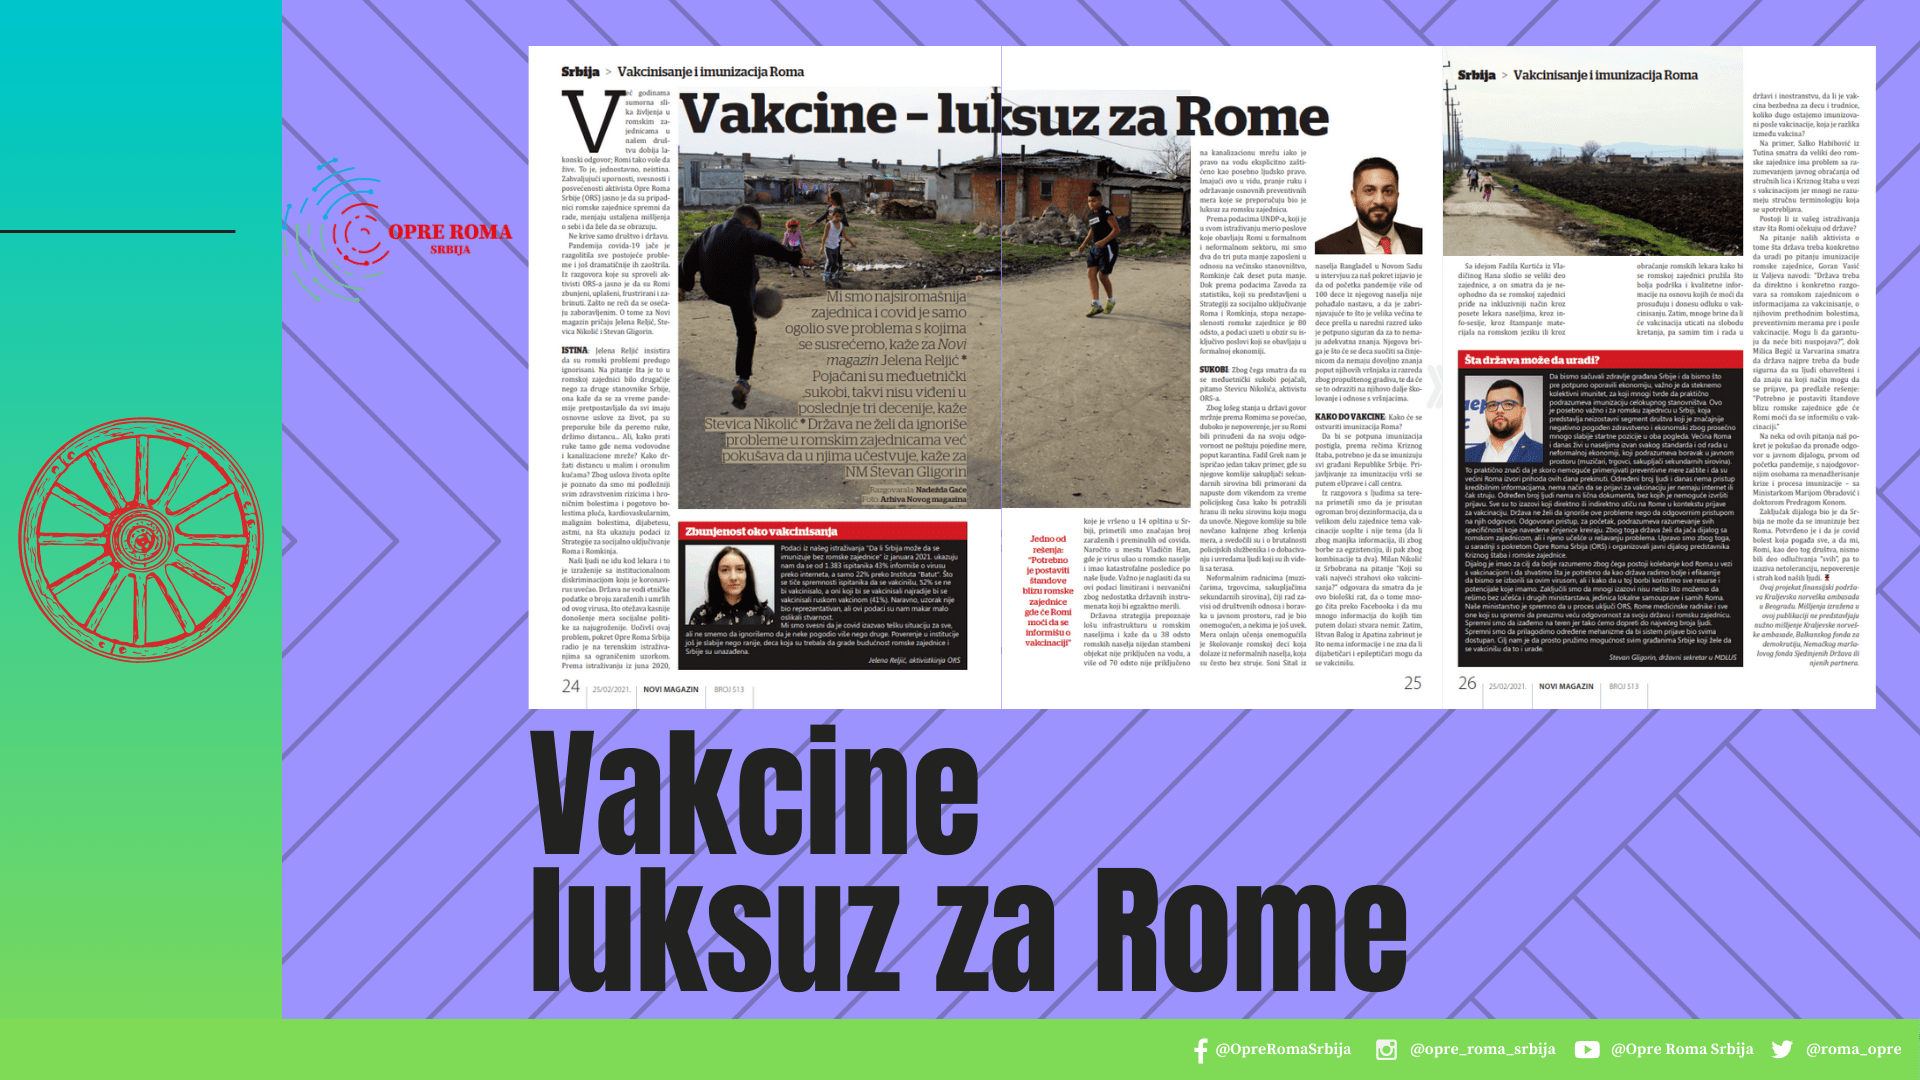 Vaccines luxury for Roma